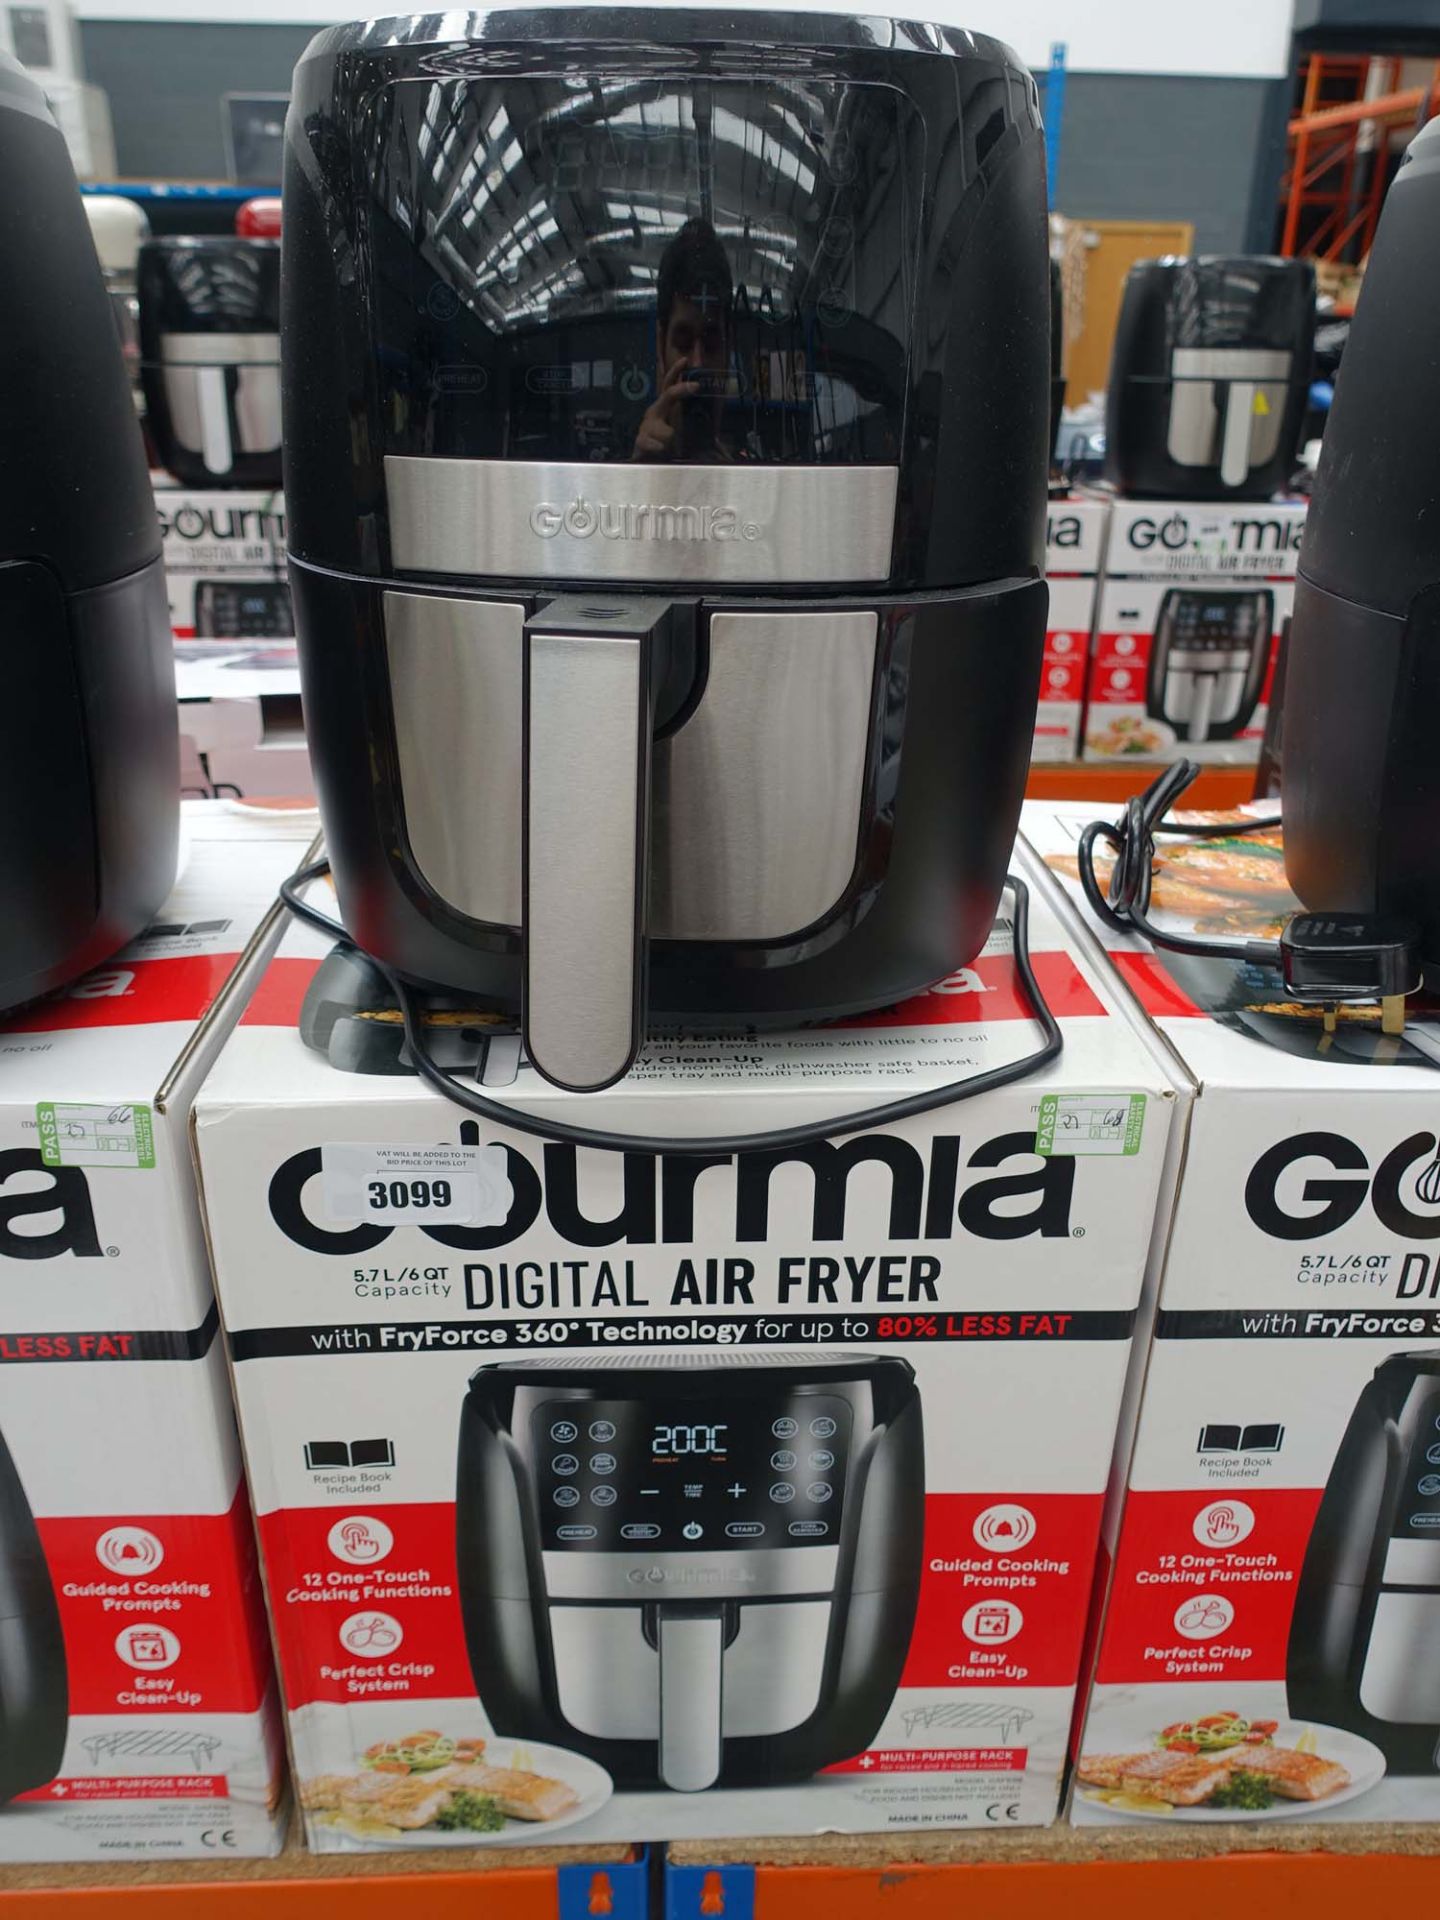 3107 Gourmia digital air fryer